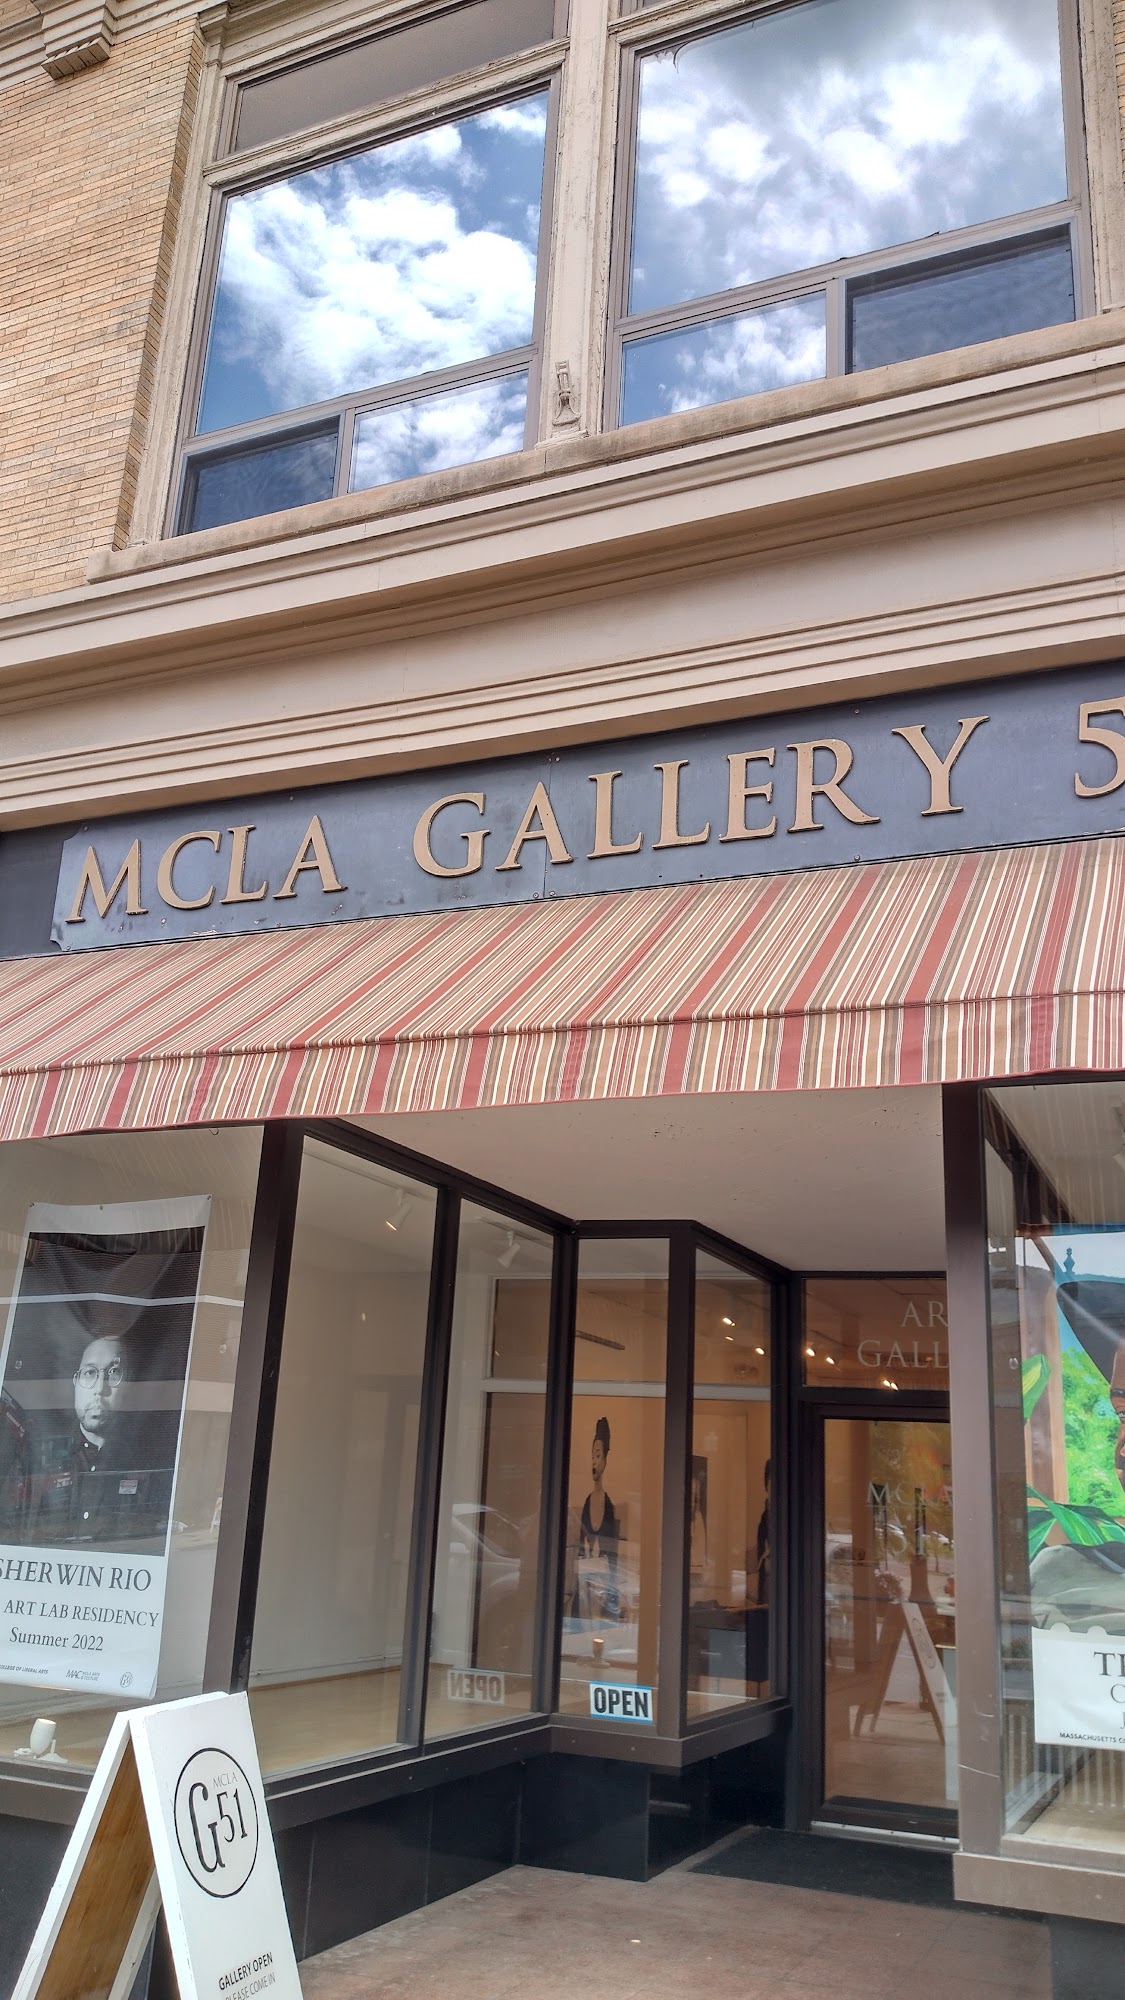 MCLA Gallery 51